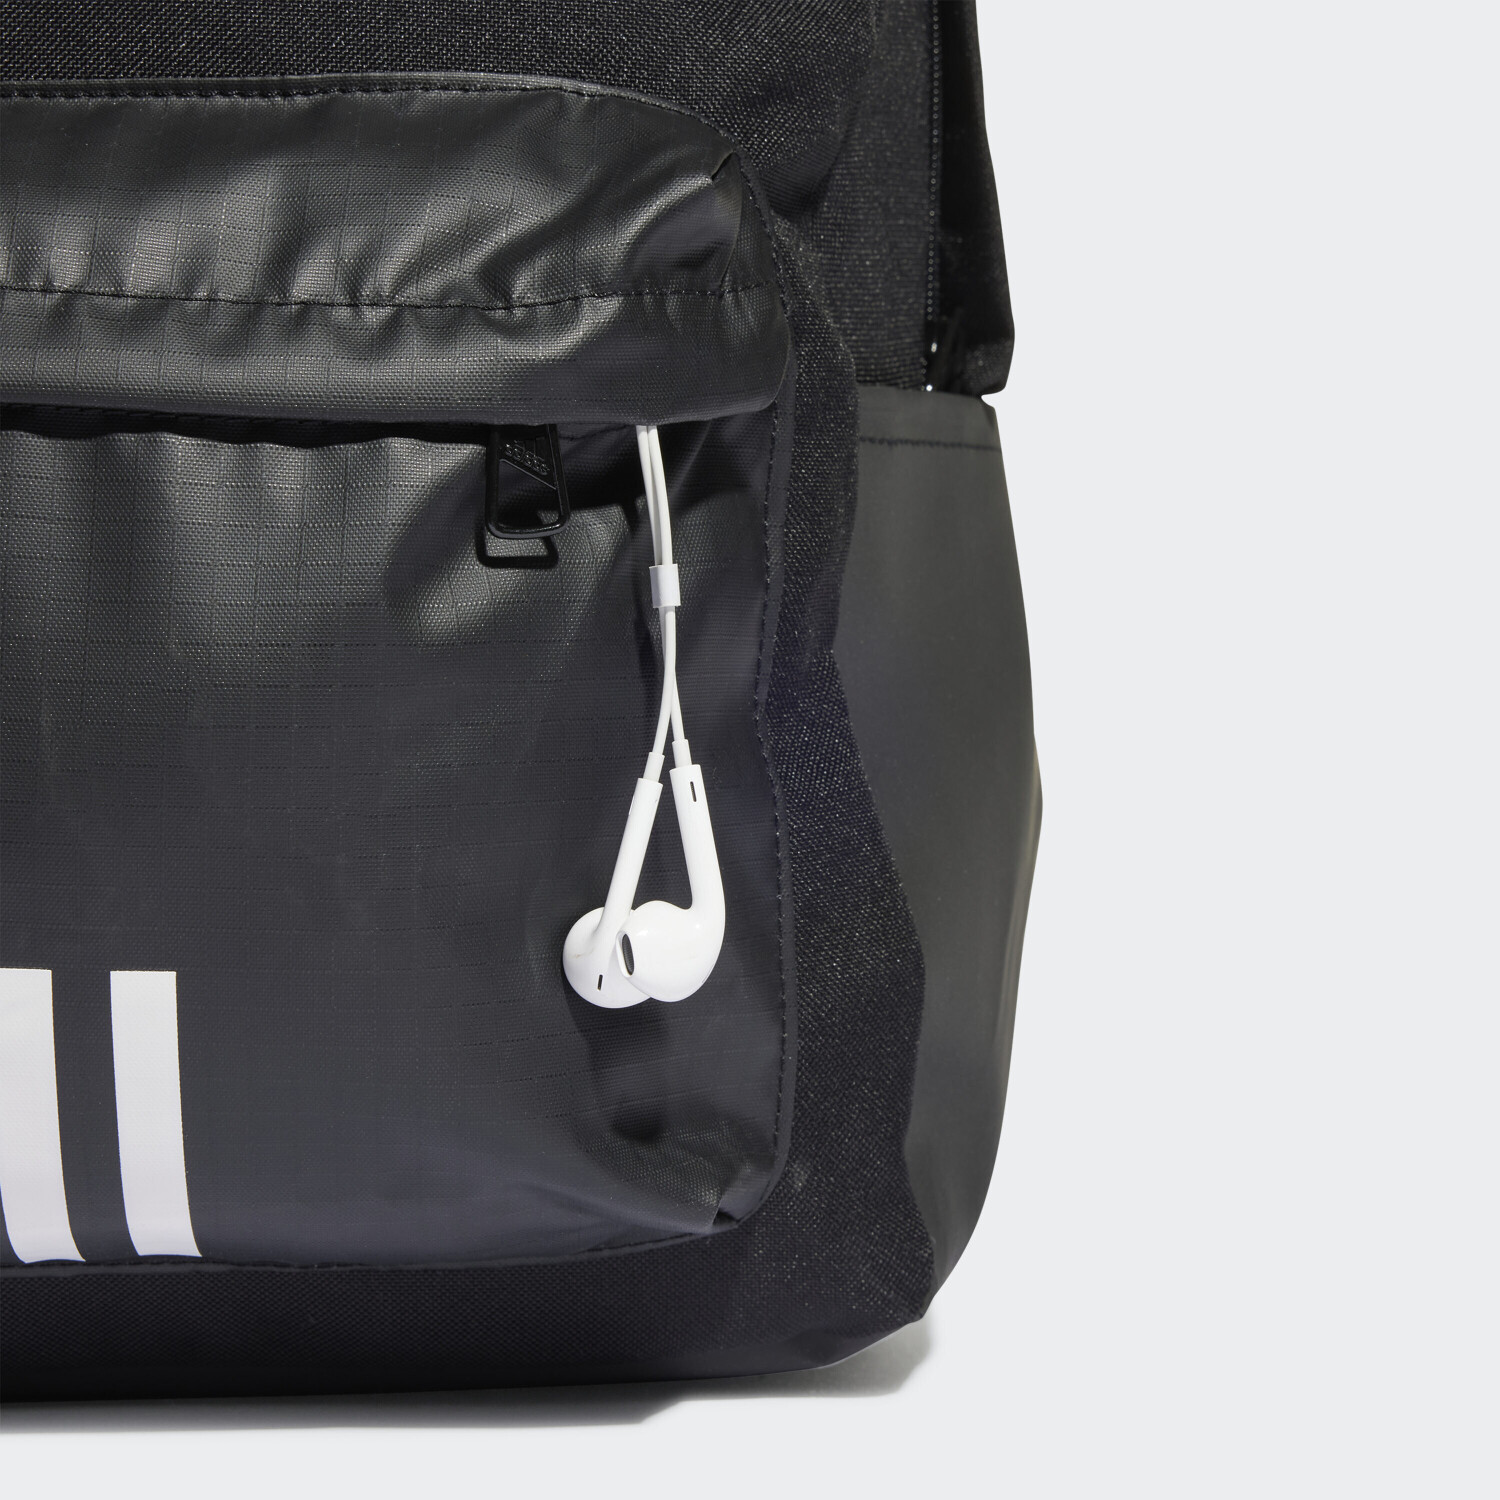 Recogiendo hojas La Iglesia mimar Adidas Classic Badge of Sport 3-Stripes Backpack black/white polyester  (HG0348) desde 18,49 € | Compara precios en idealo